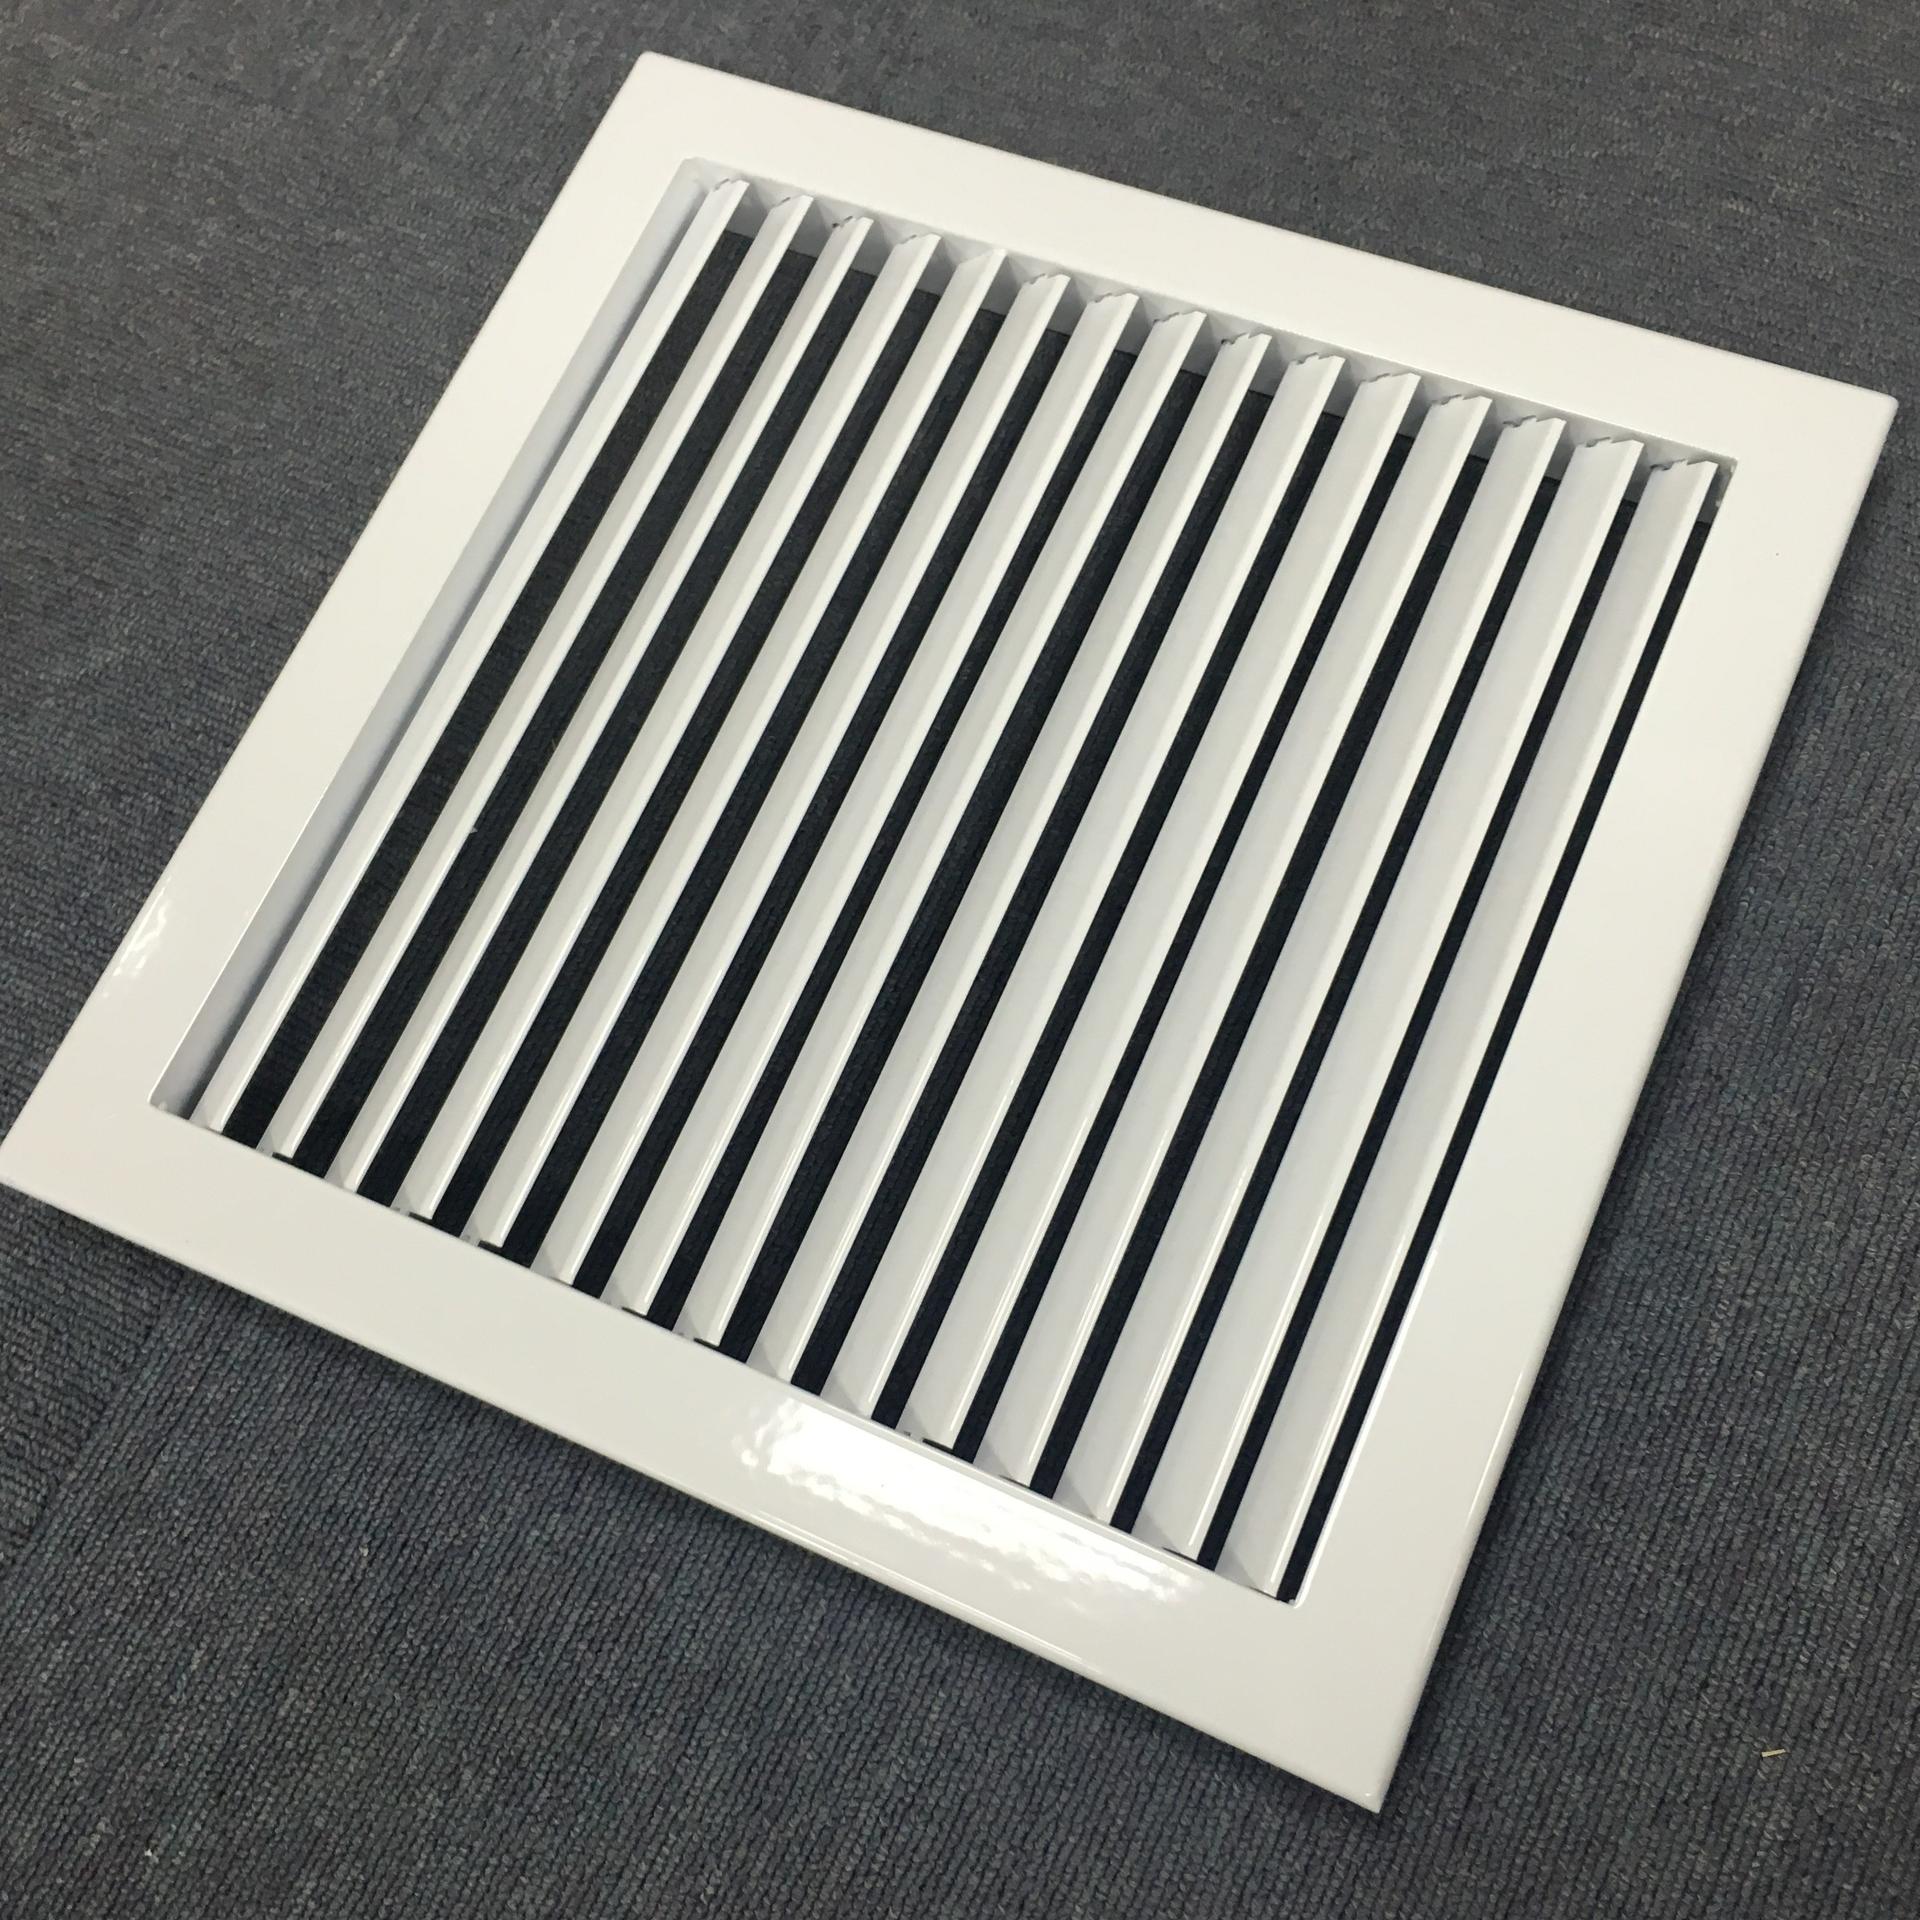 HVAC toilet return grille fresh air ventilation vent